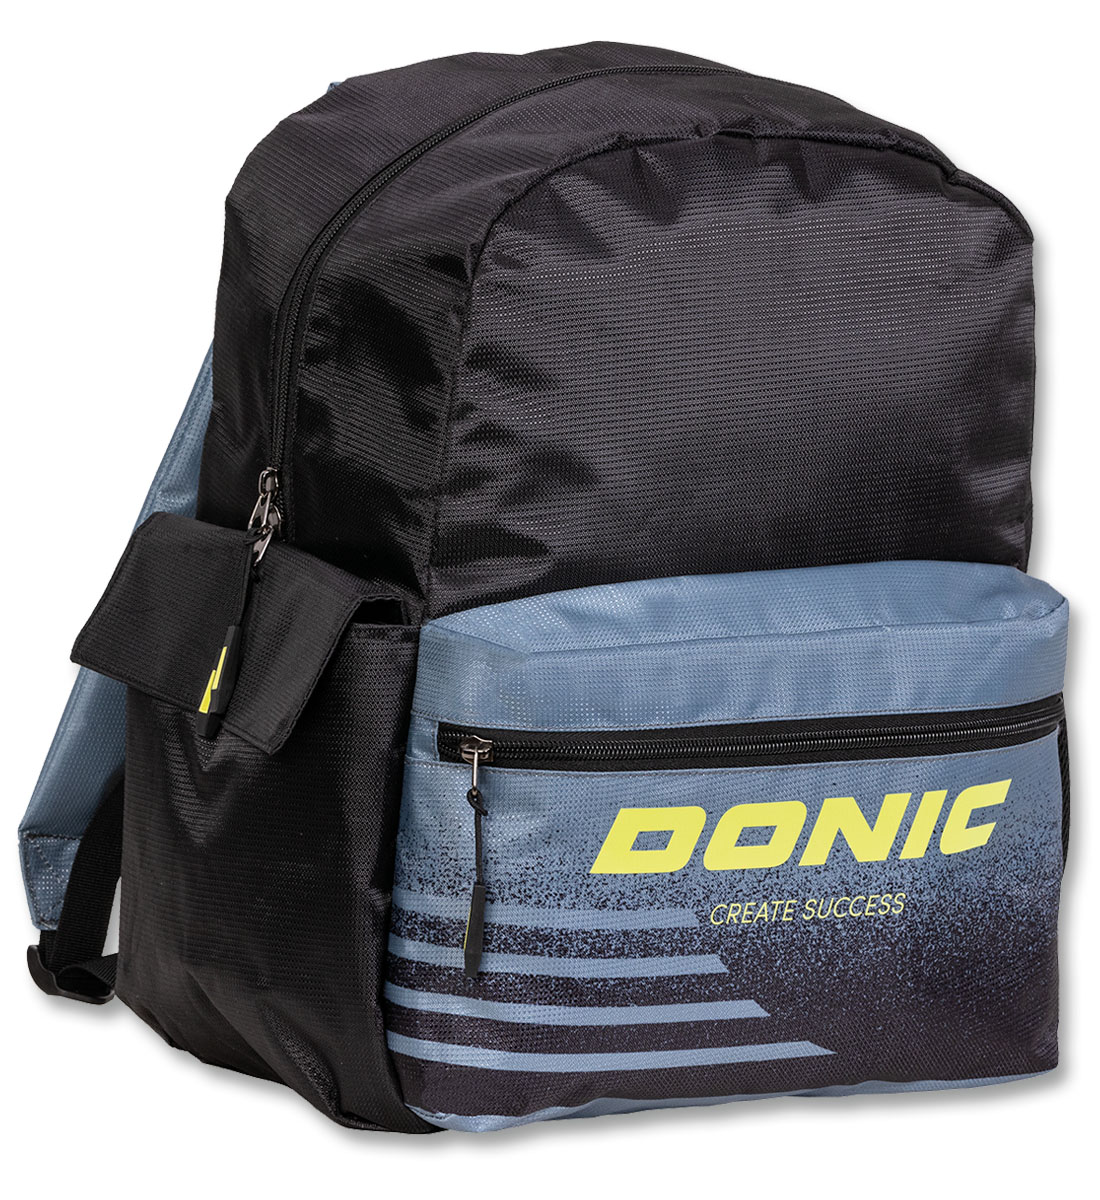 Table Tennis Bag: Donic Bag Snipe - Blue